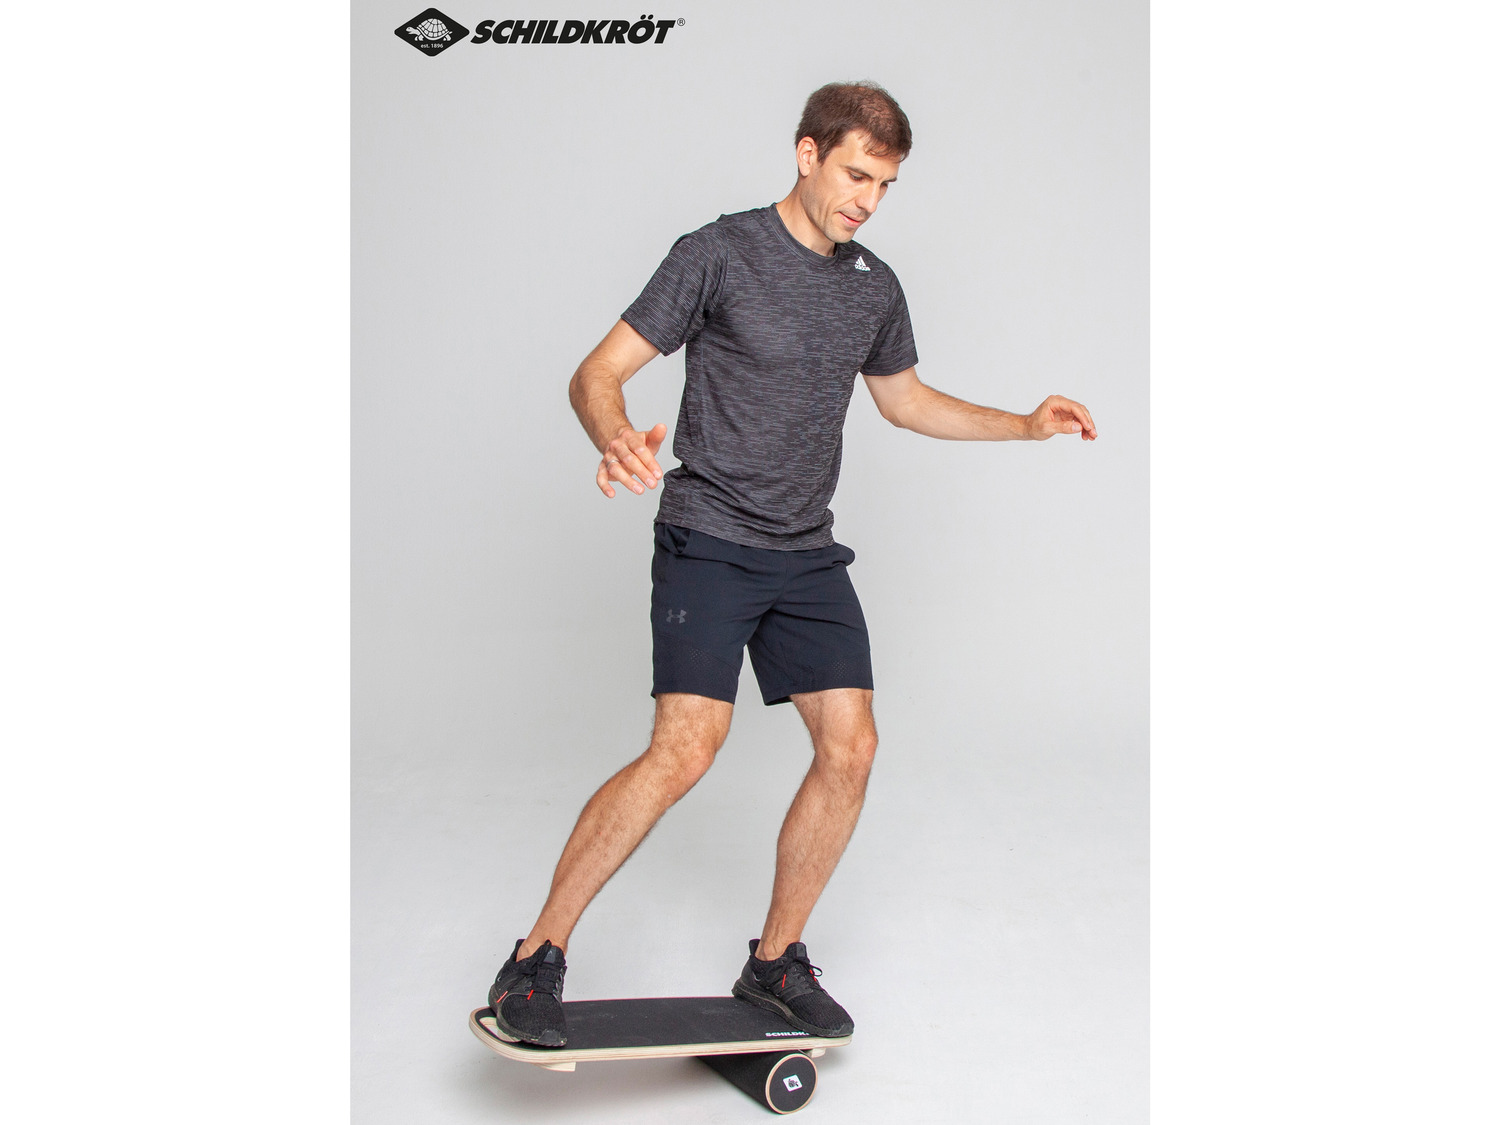 Fitness Schildkröt Balance Board | LIDL Wooden